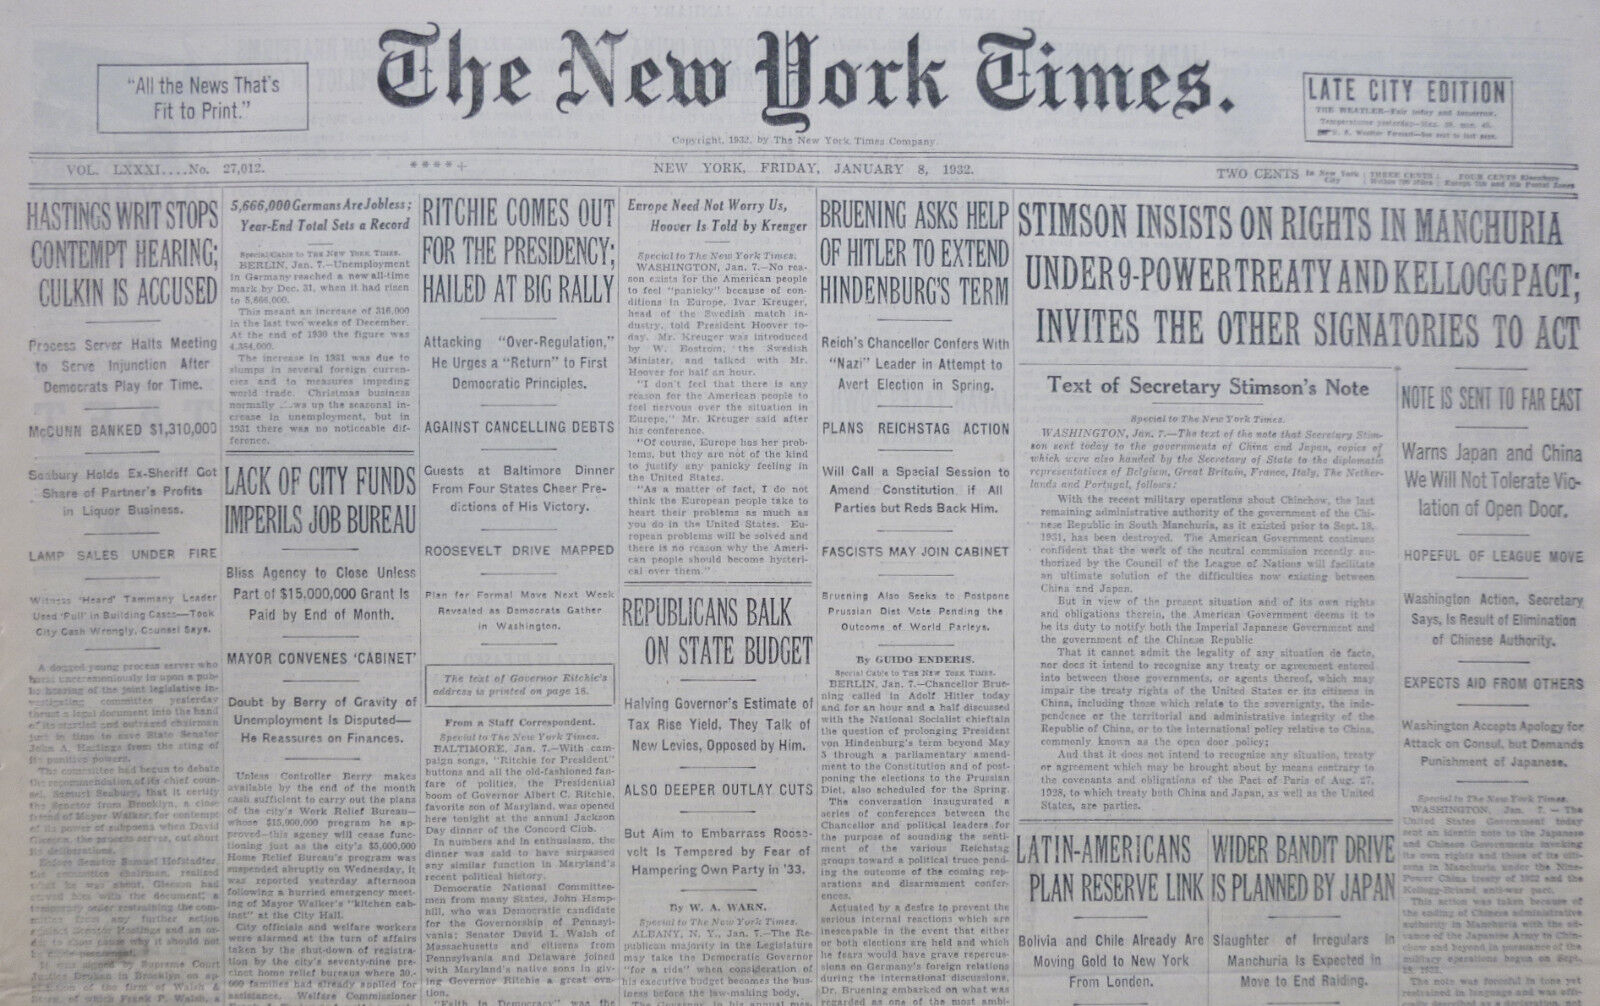 1-1932 January 8 MANCHUKIA RIGHTS BRUENING HITLER. KELLOGG PACT INVITES TO ACT